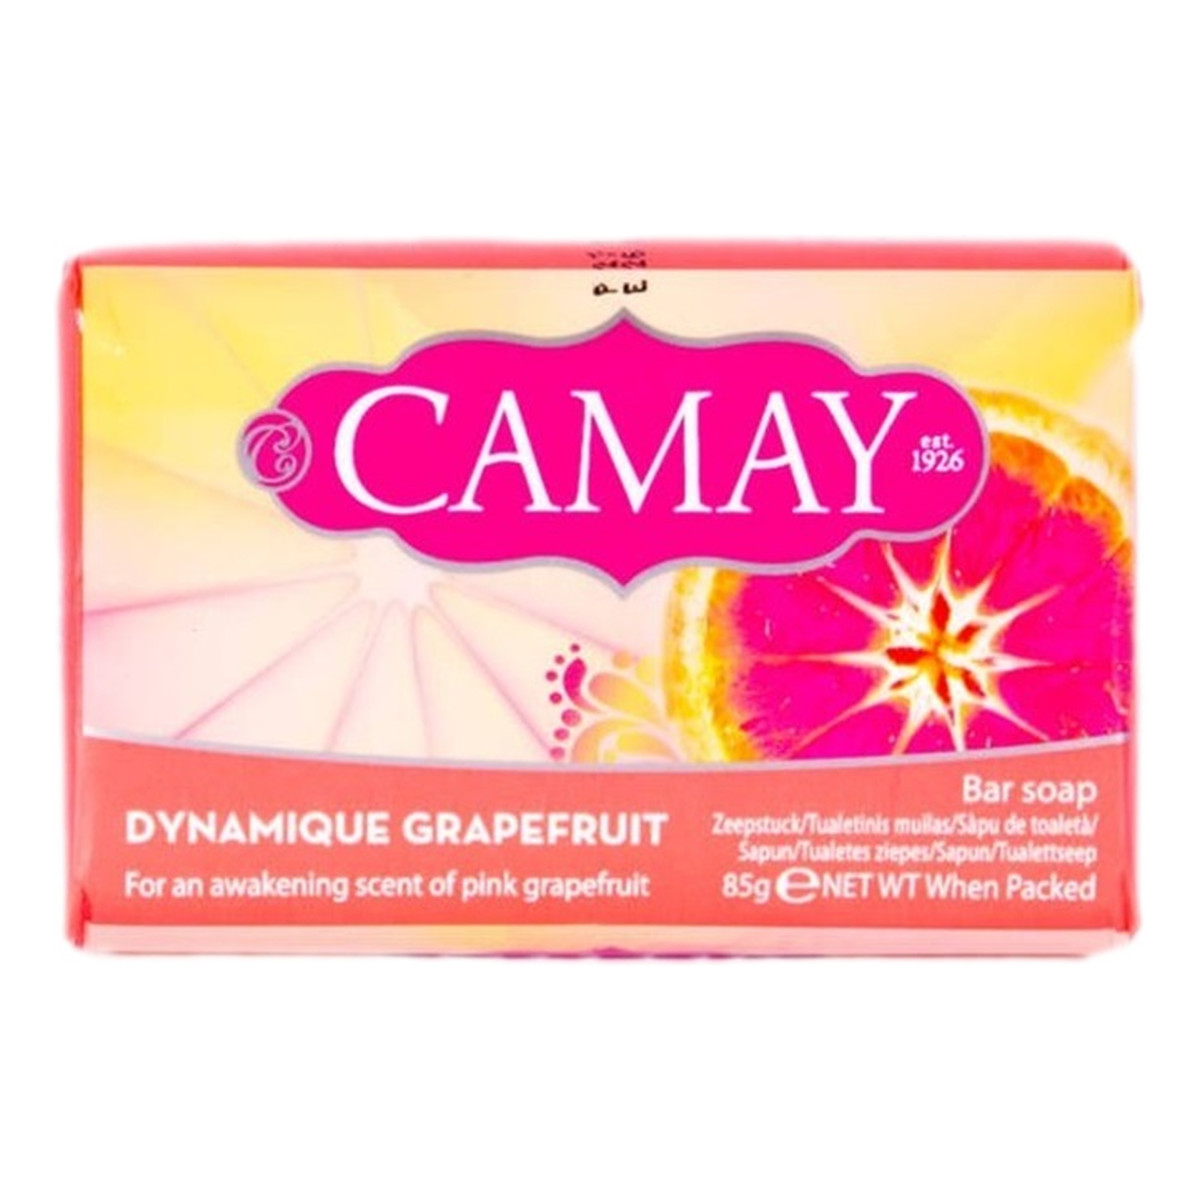 Camay mydło w kostce Dynamique Grapefruit 85g